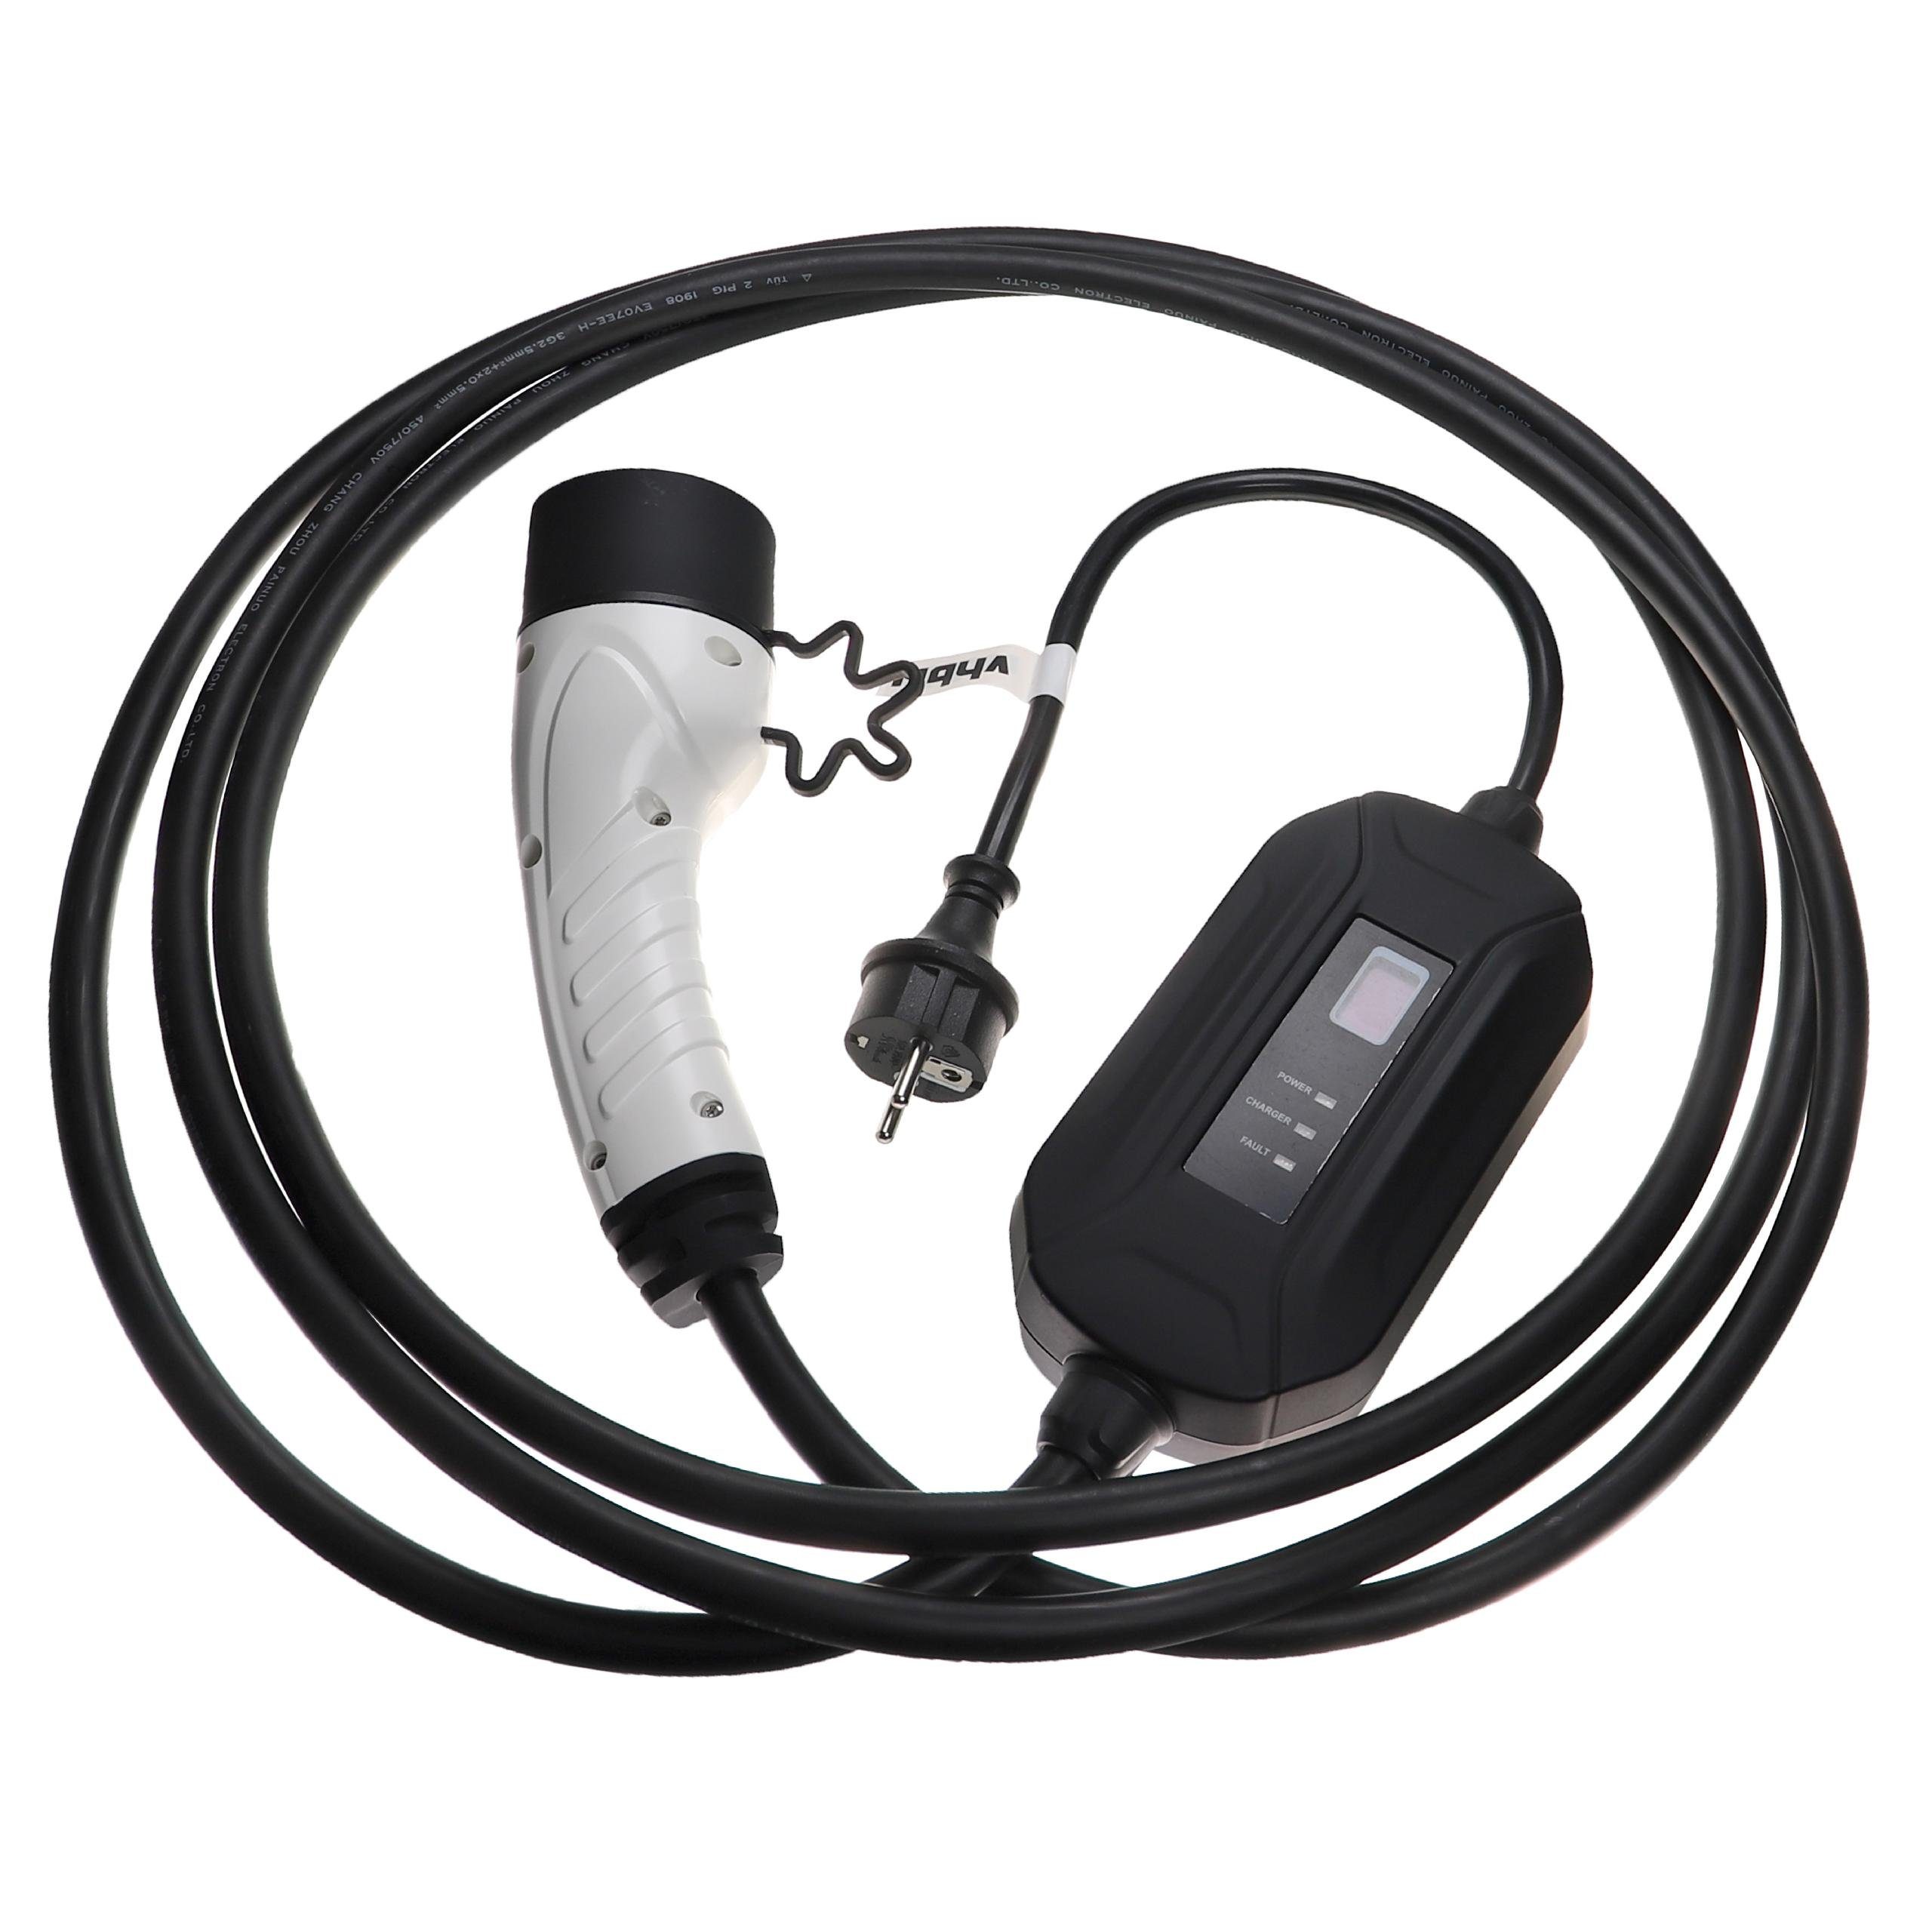 Elektro-Kabel S90 Recharge Recharge, S90 passend vhbw Volvo PHEV, S60 Recharge, C40 für